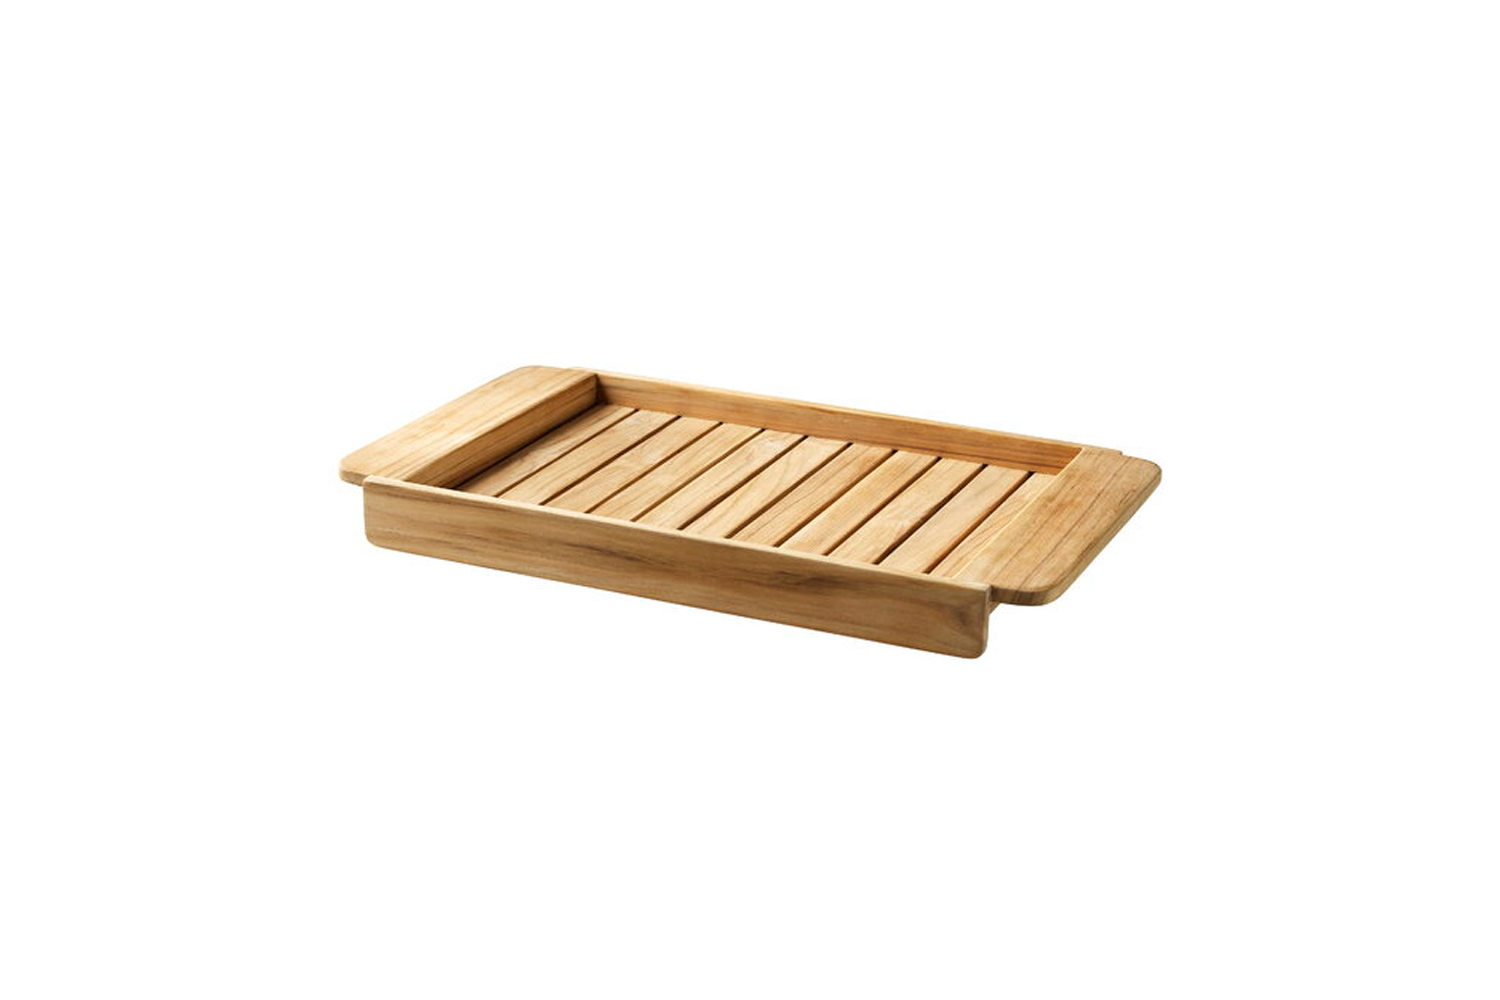 the fdb møbler m9 sammen tray is \$76.60 at finnish design shop. 9